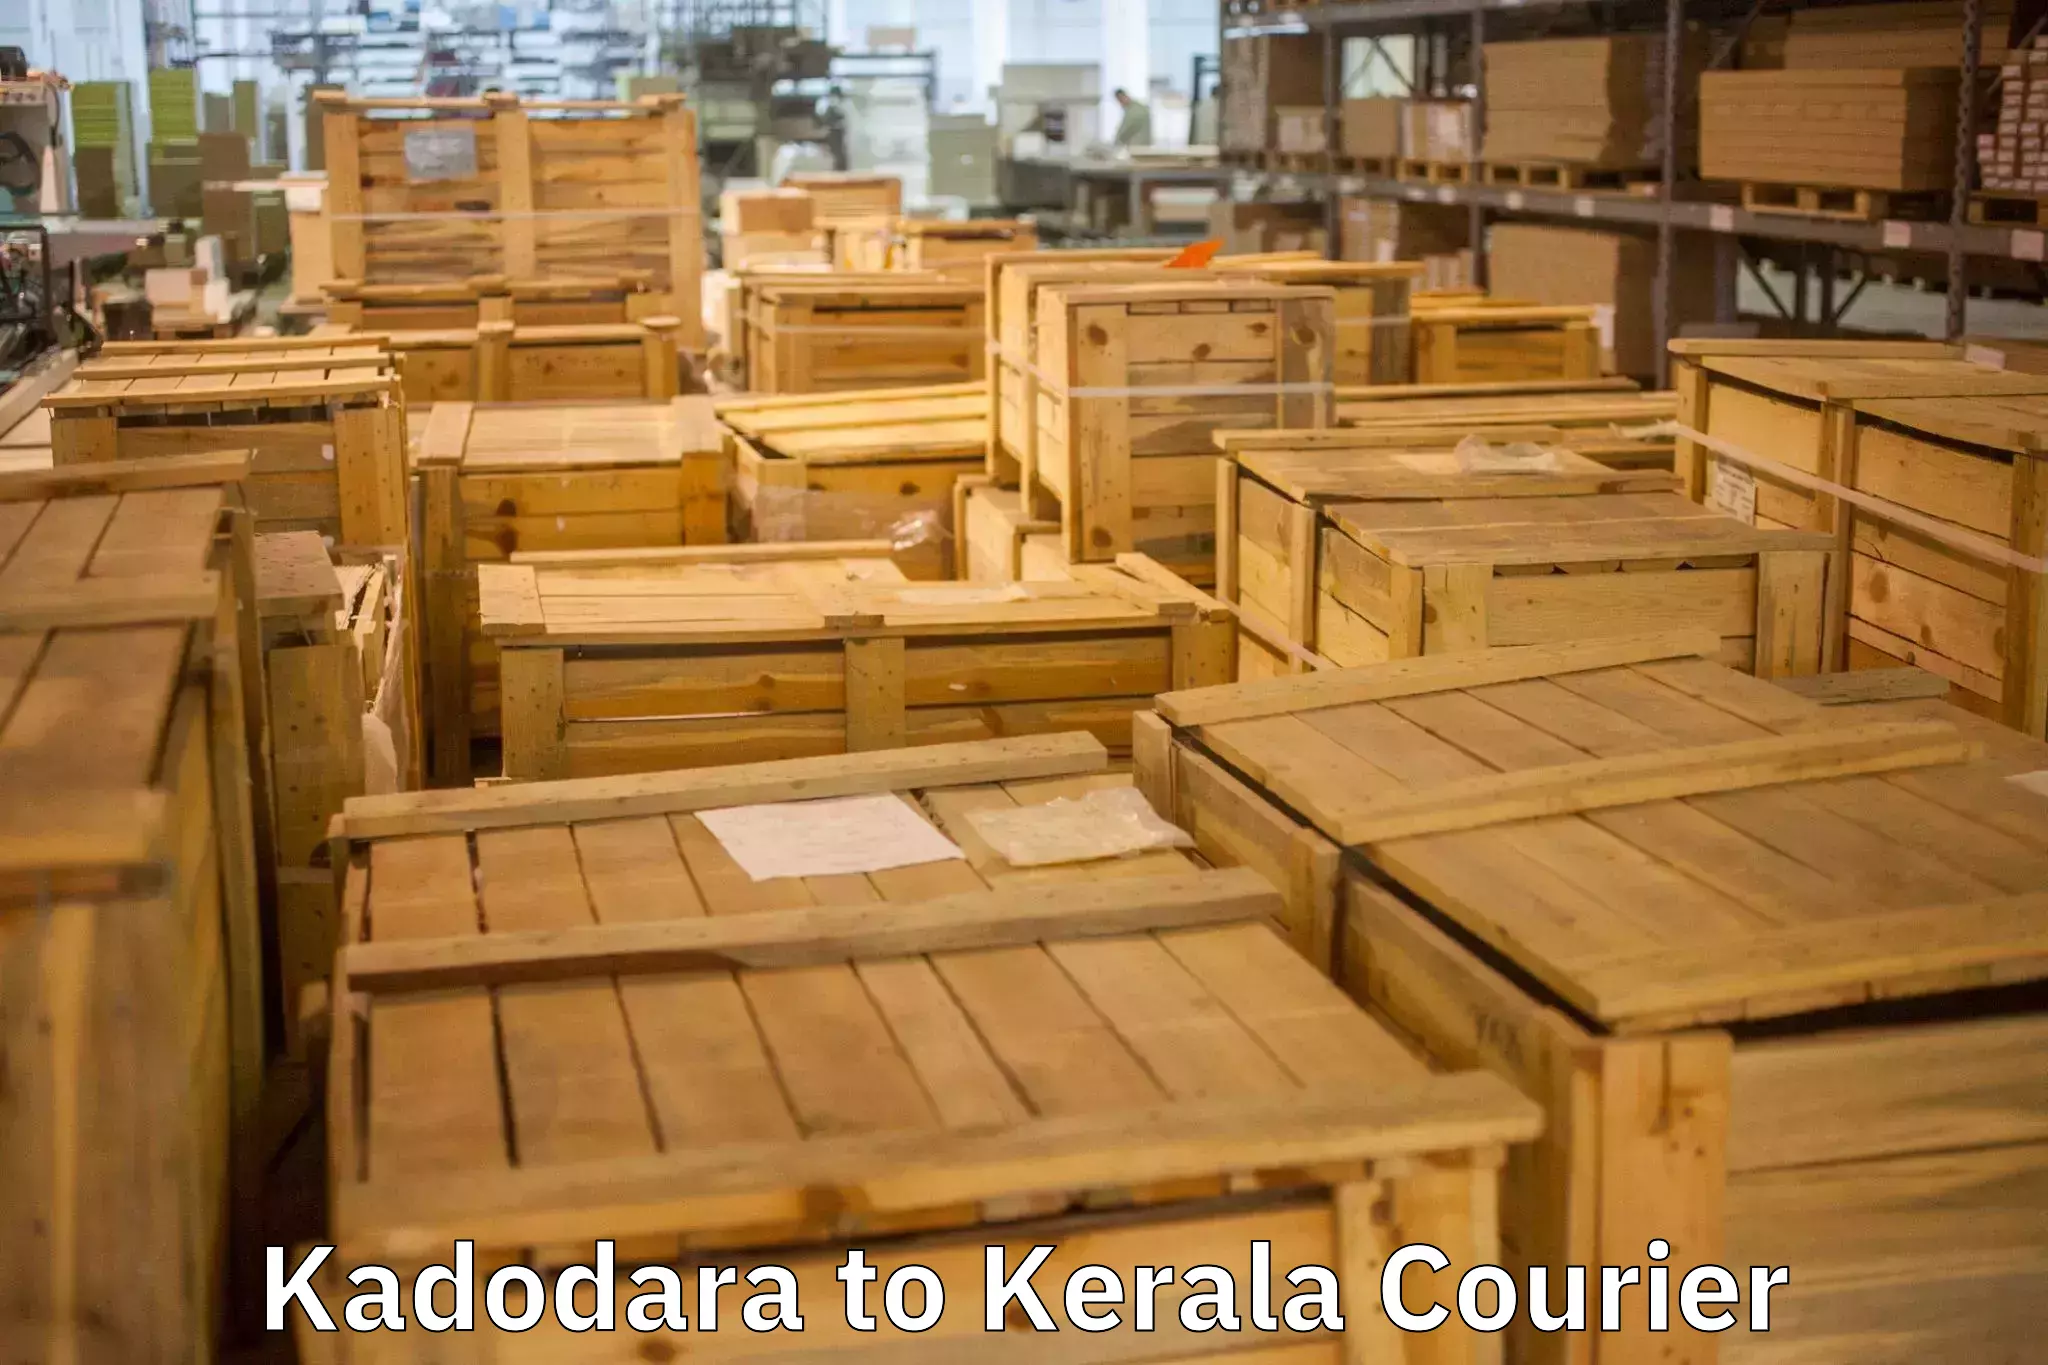 Professional moving company Kadodara to Angamaly